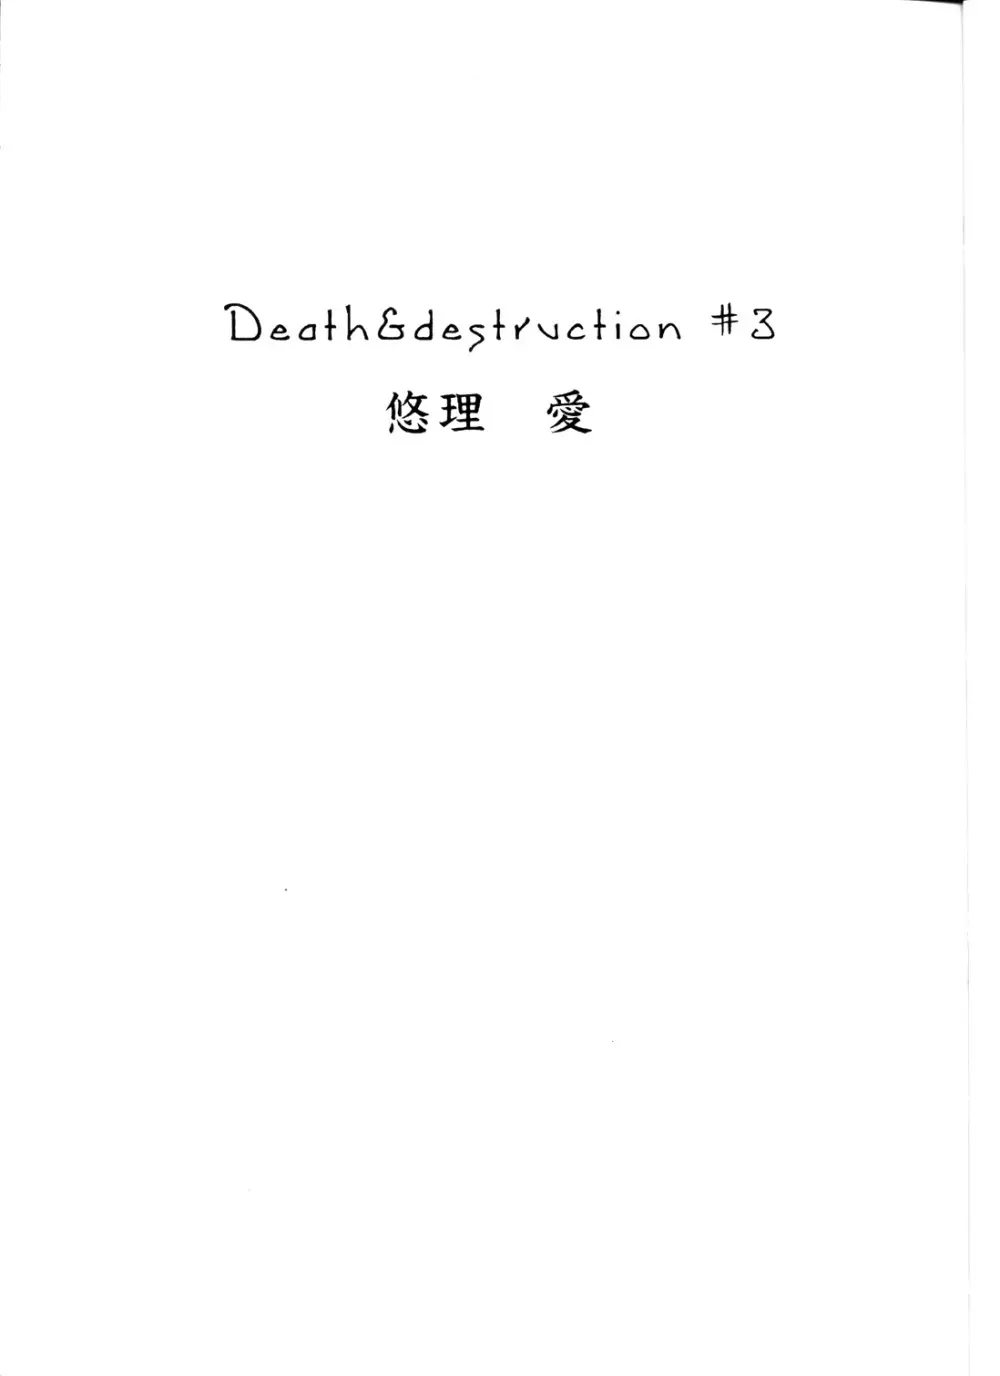 Death & Destruction #3 3ページ